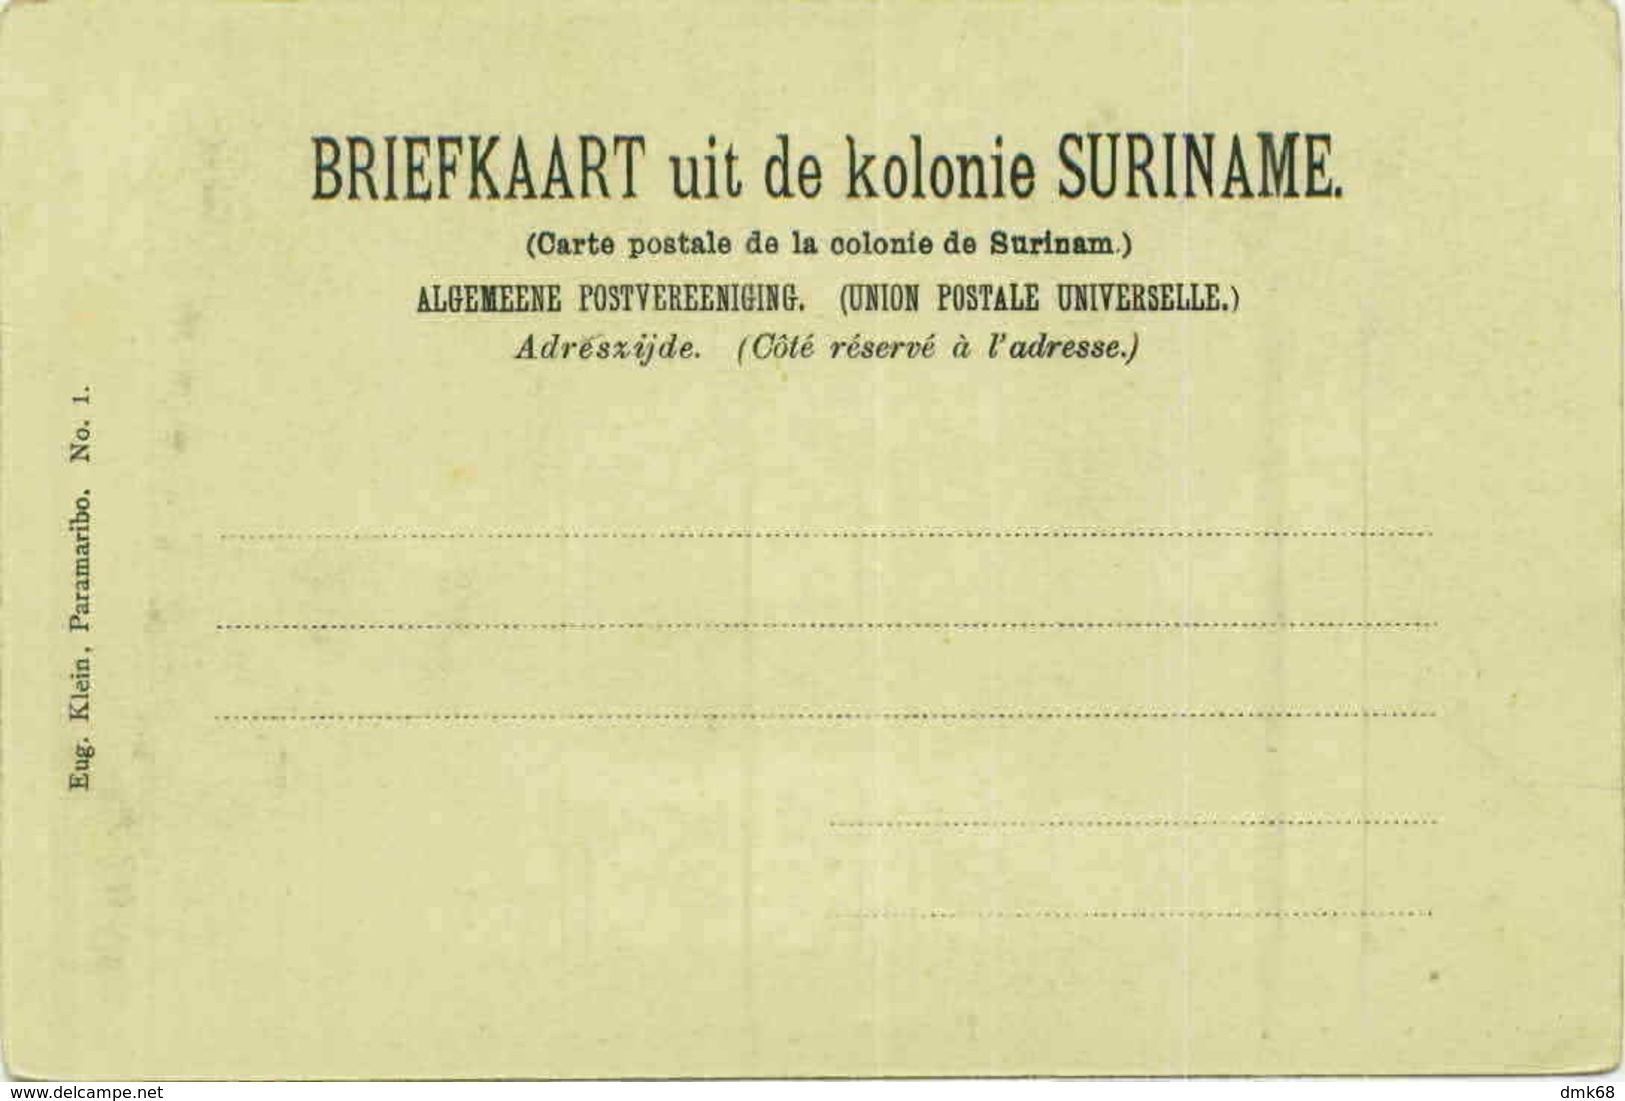 SURINAME - PARAMARIBO - HEERENSTRAAT - EDIT EUG. KLEIN - 1900s (BG4833) - Surinam